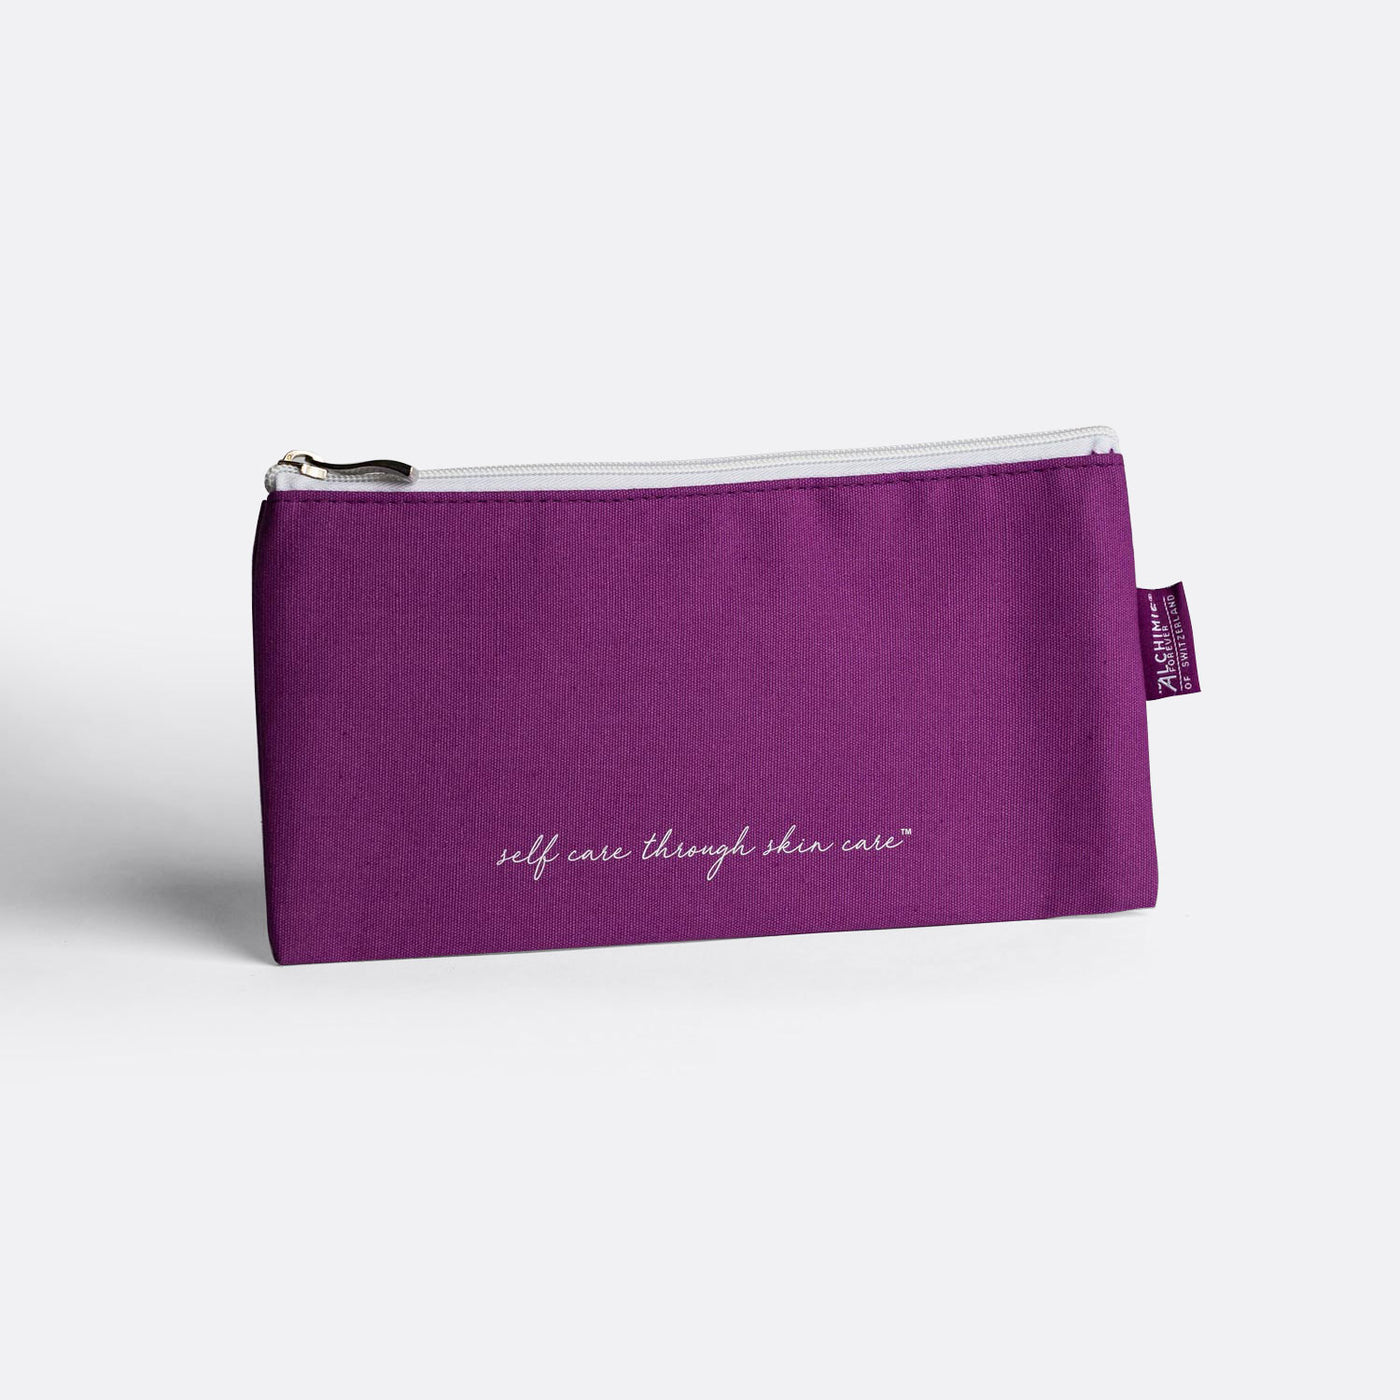 Alchimie Forever Self Care Through Skin Care purple cosmetics bag.